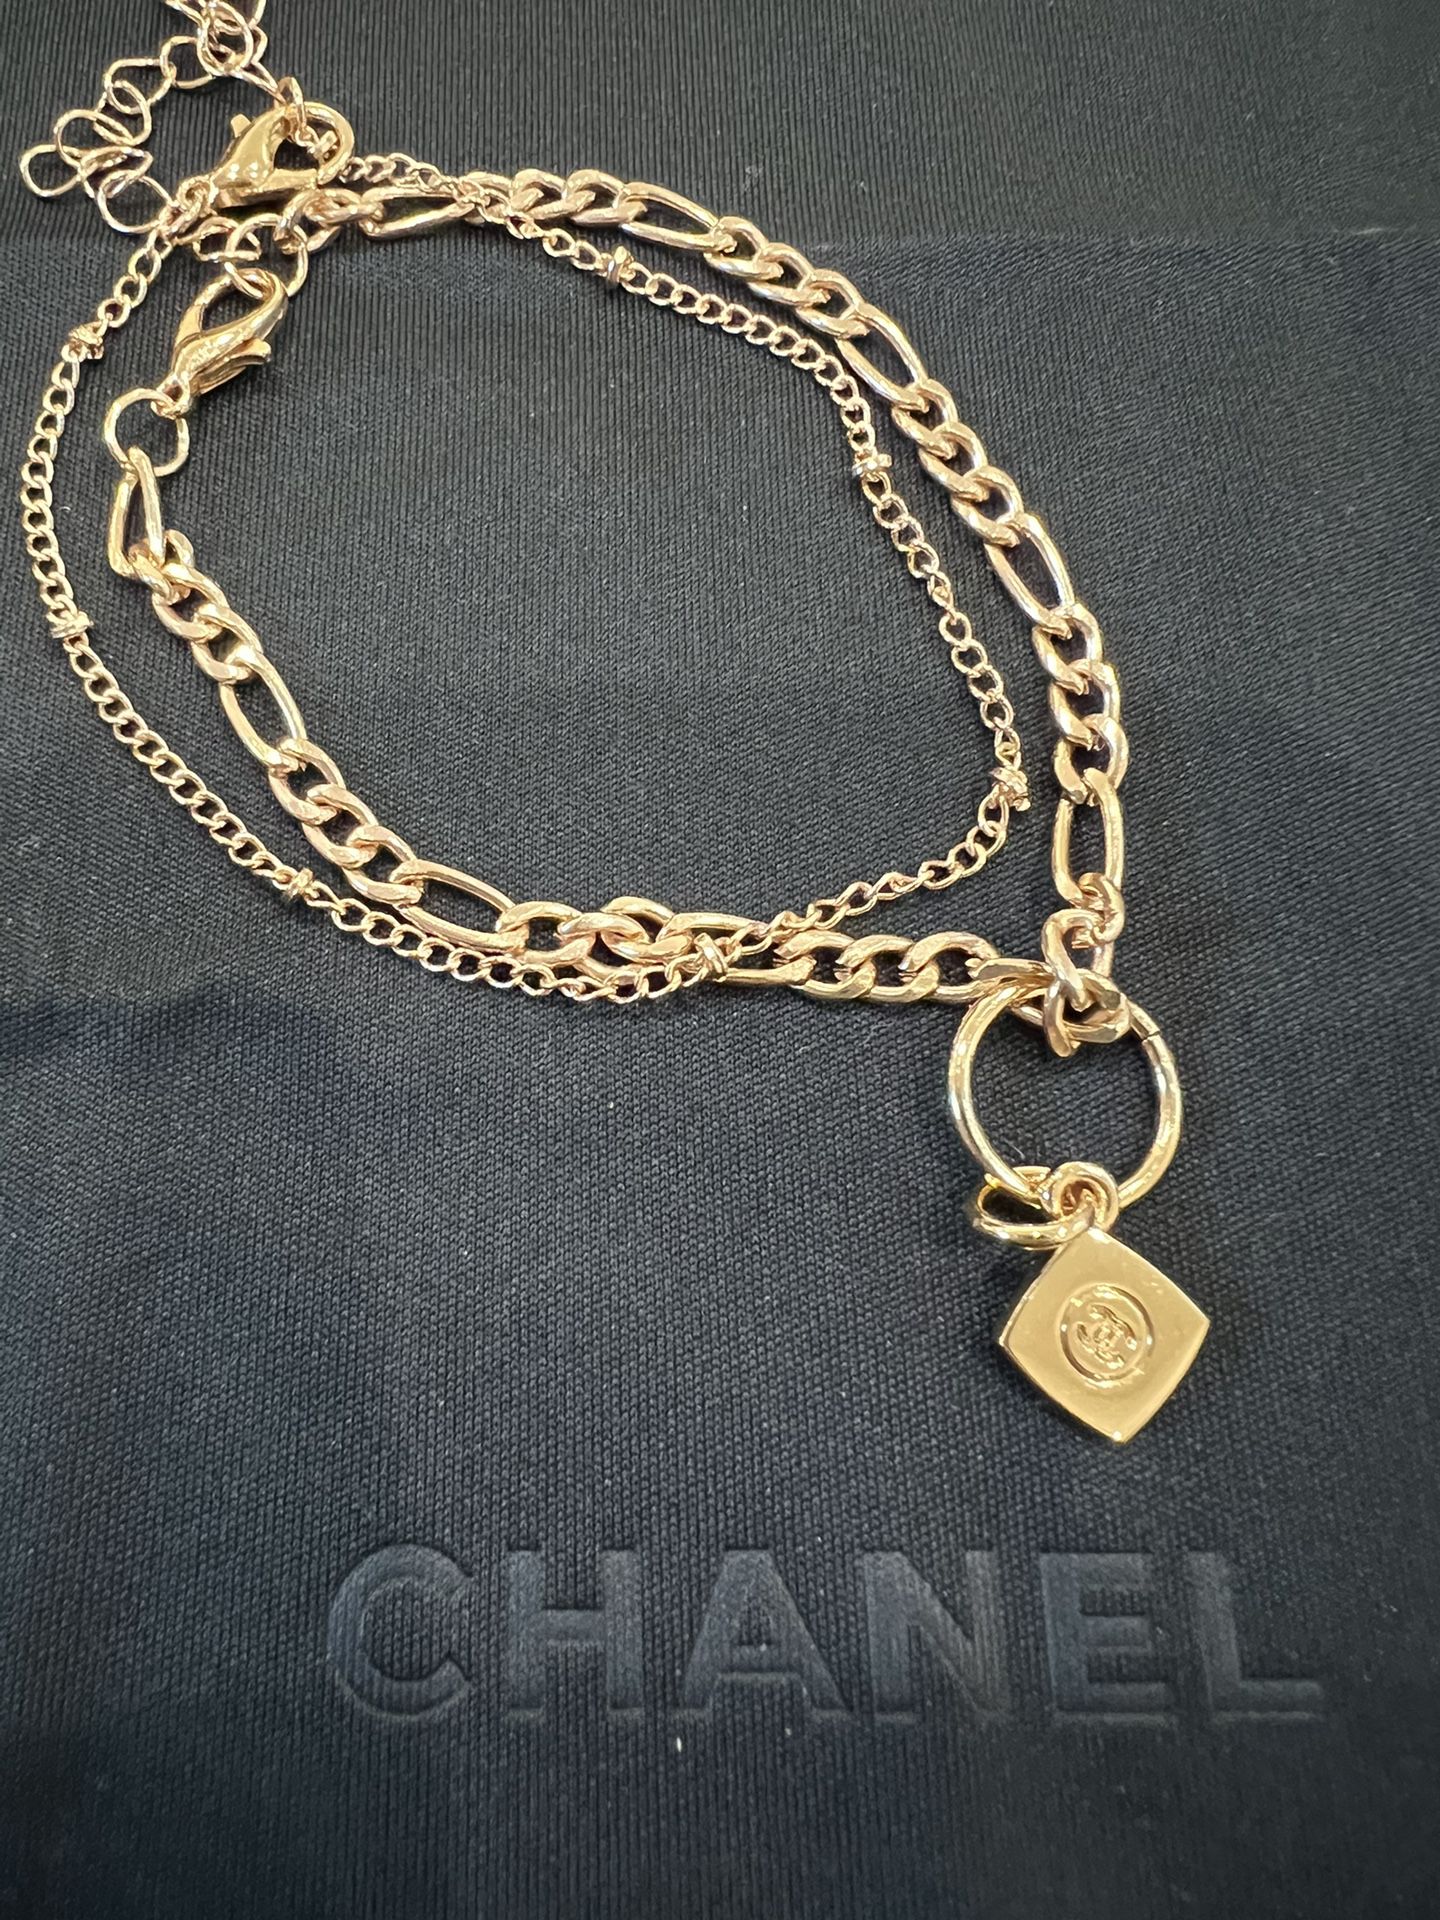 Chanel CC Charm Bracelet 